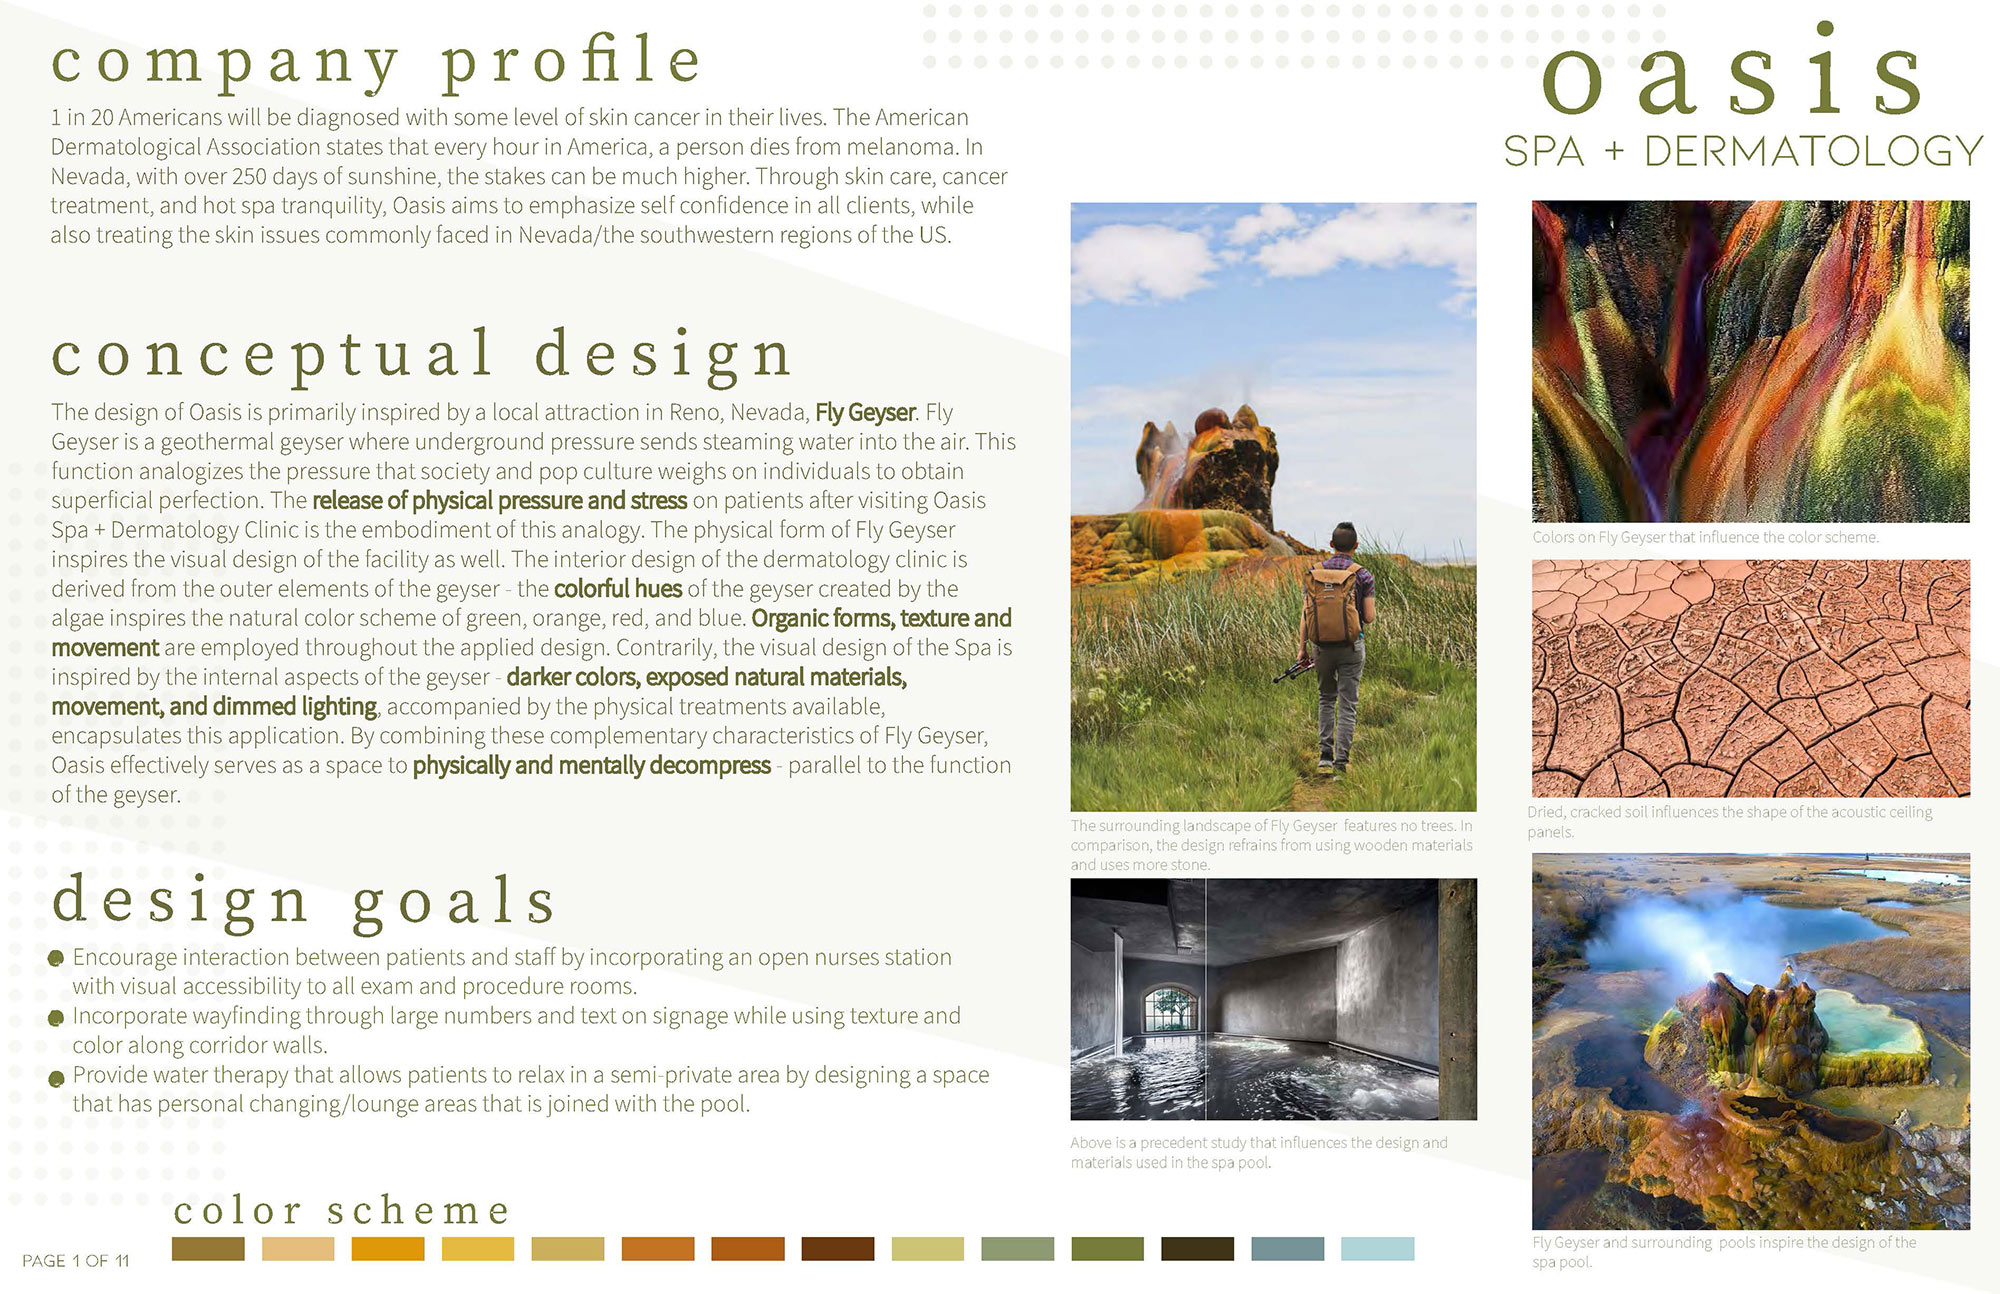 board with company profile, conceptual design, design goals, and color scheme information. right side shows landscape/design inspiration photos 